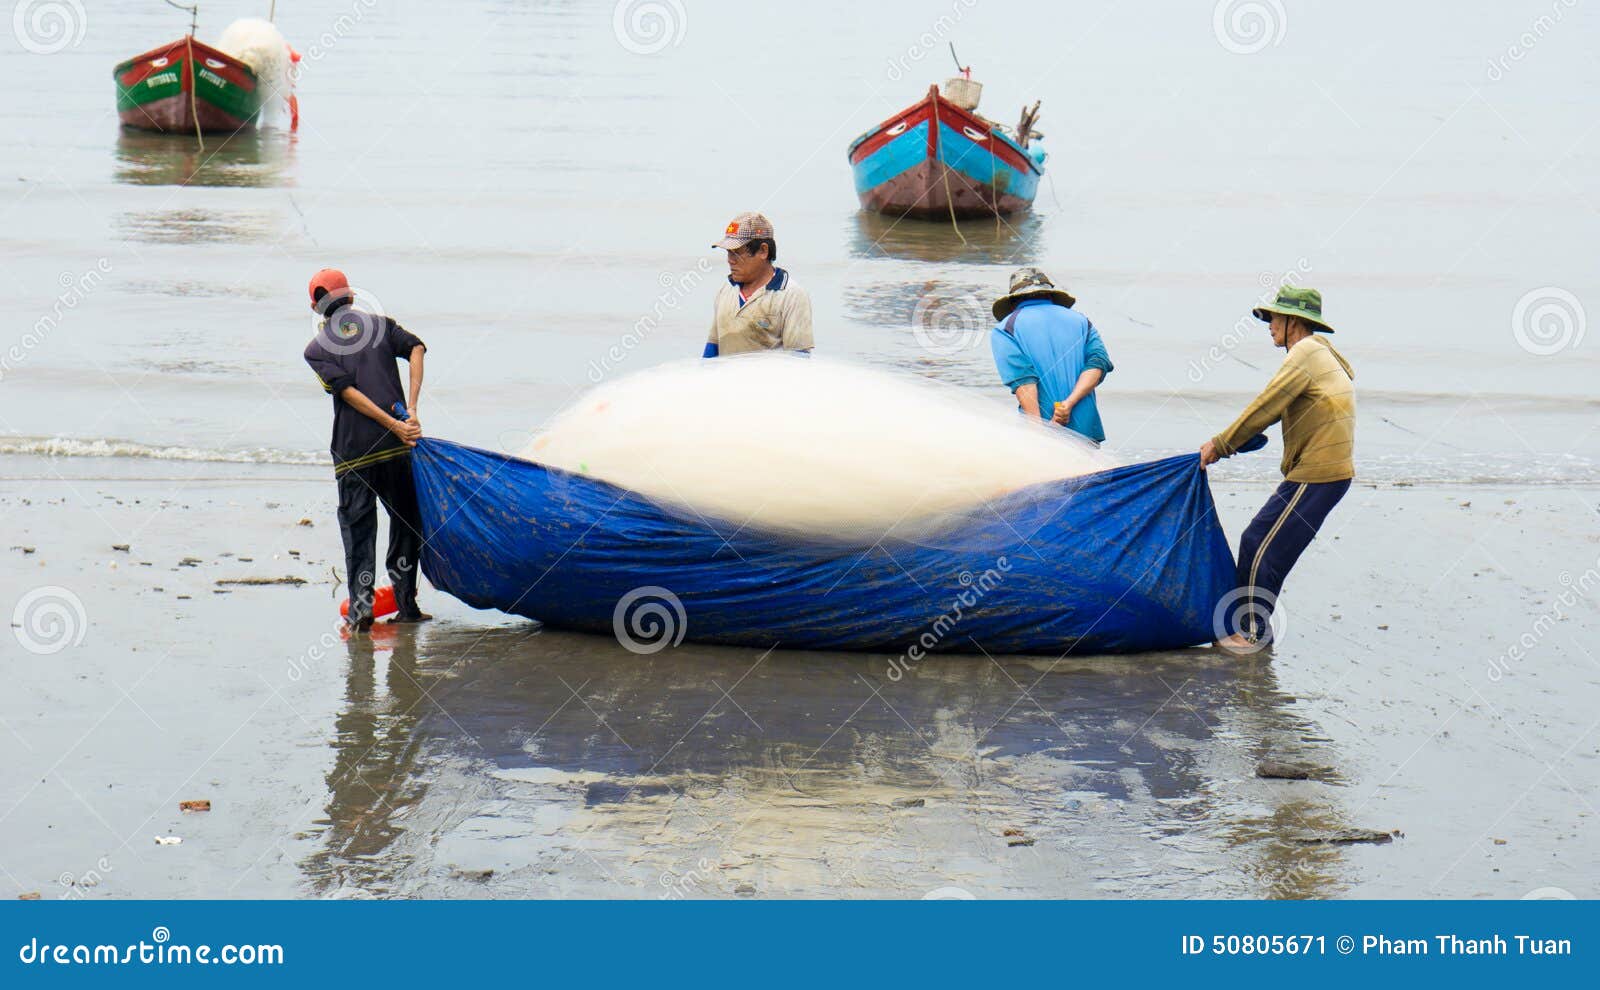 118 Group Fisherman Pull Fish Net Stock Photos - Free & Royalty